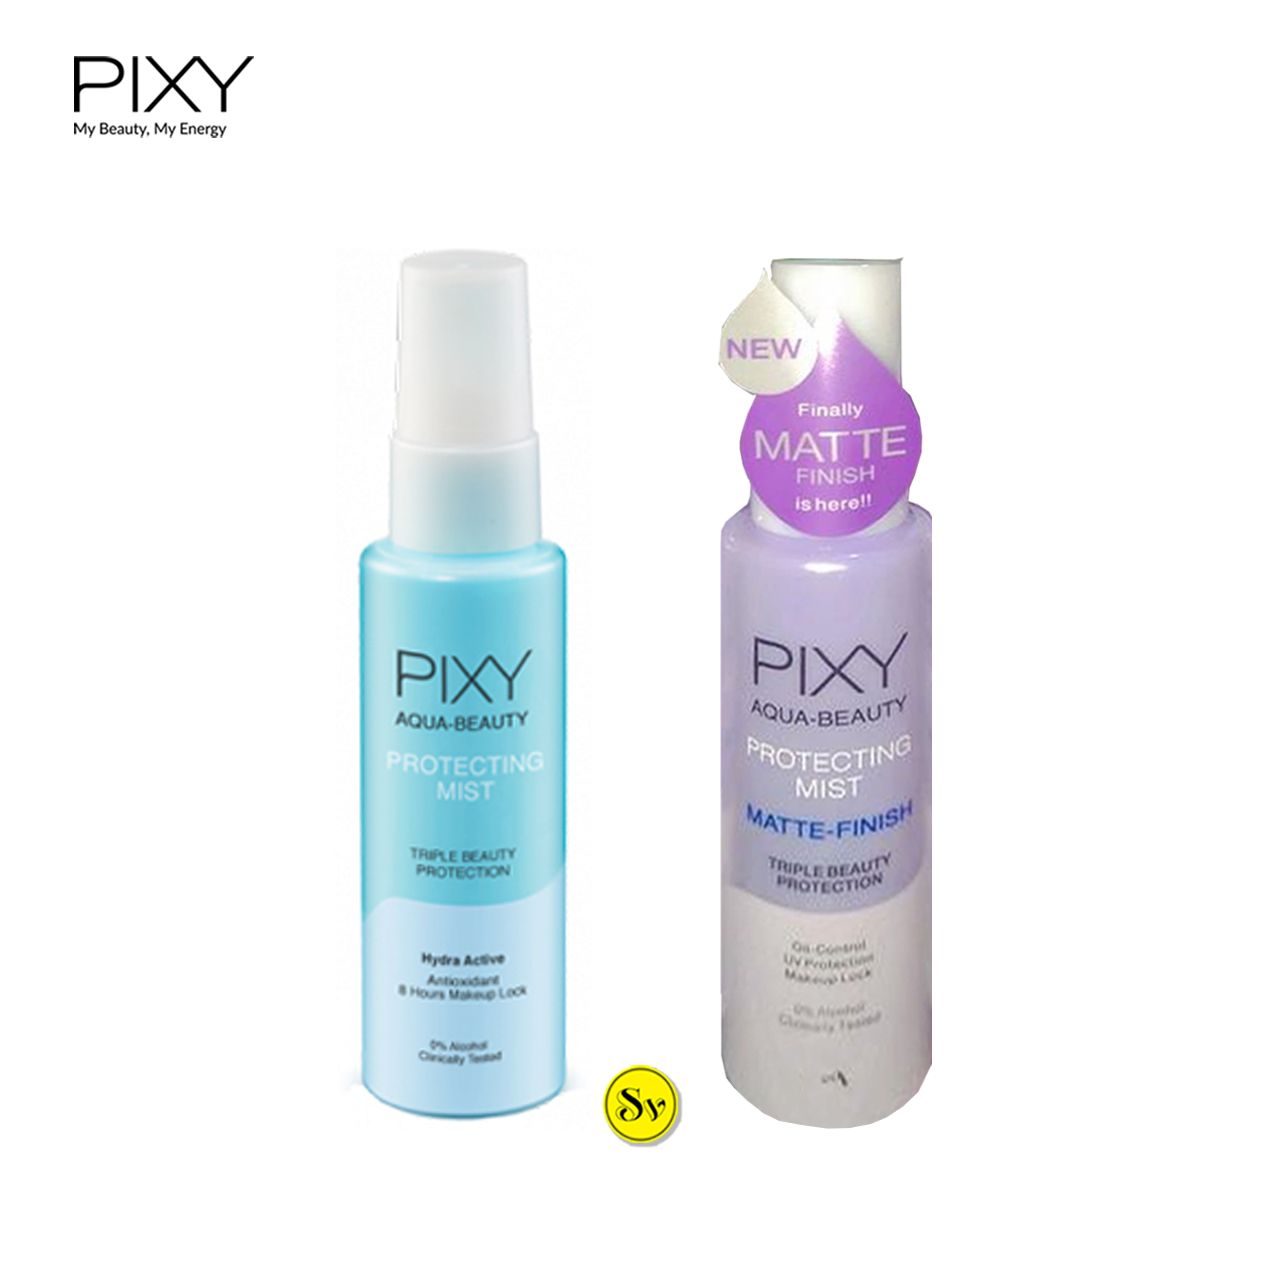 Rekomendasi Setting Spray - Pixy Aqua Beauty Protecting Mist